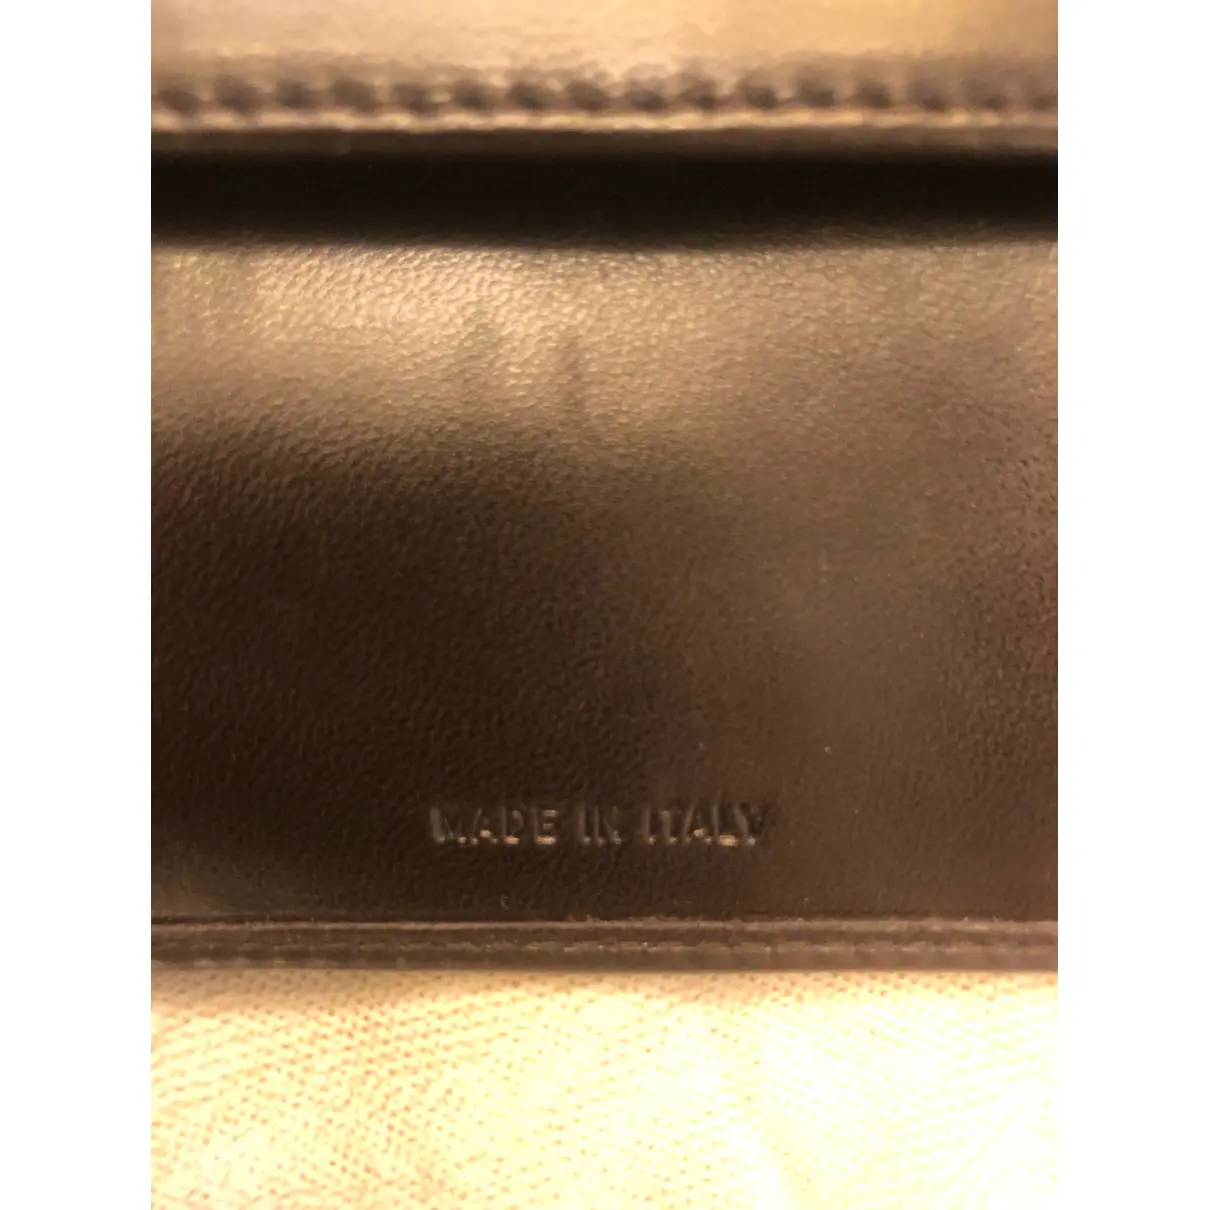 Leather small bag Prada